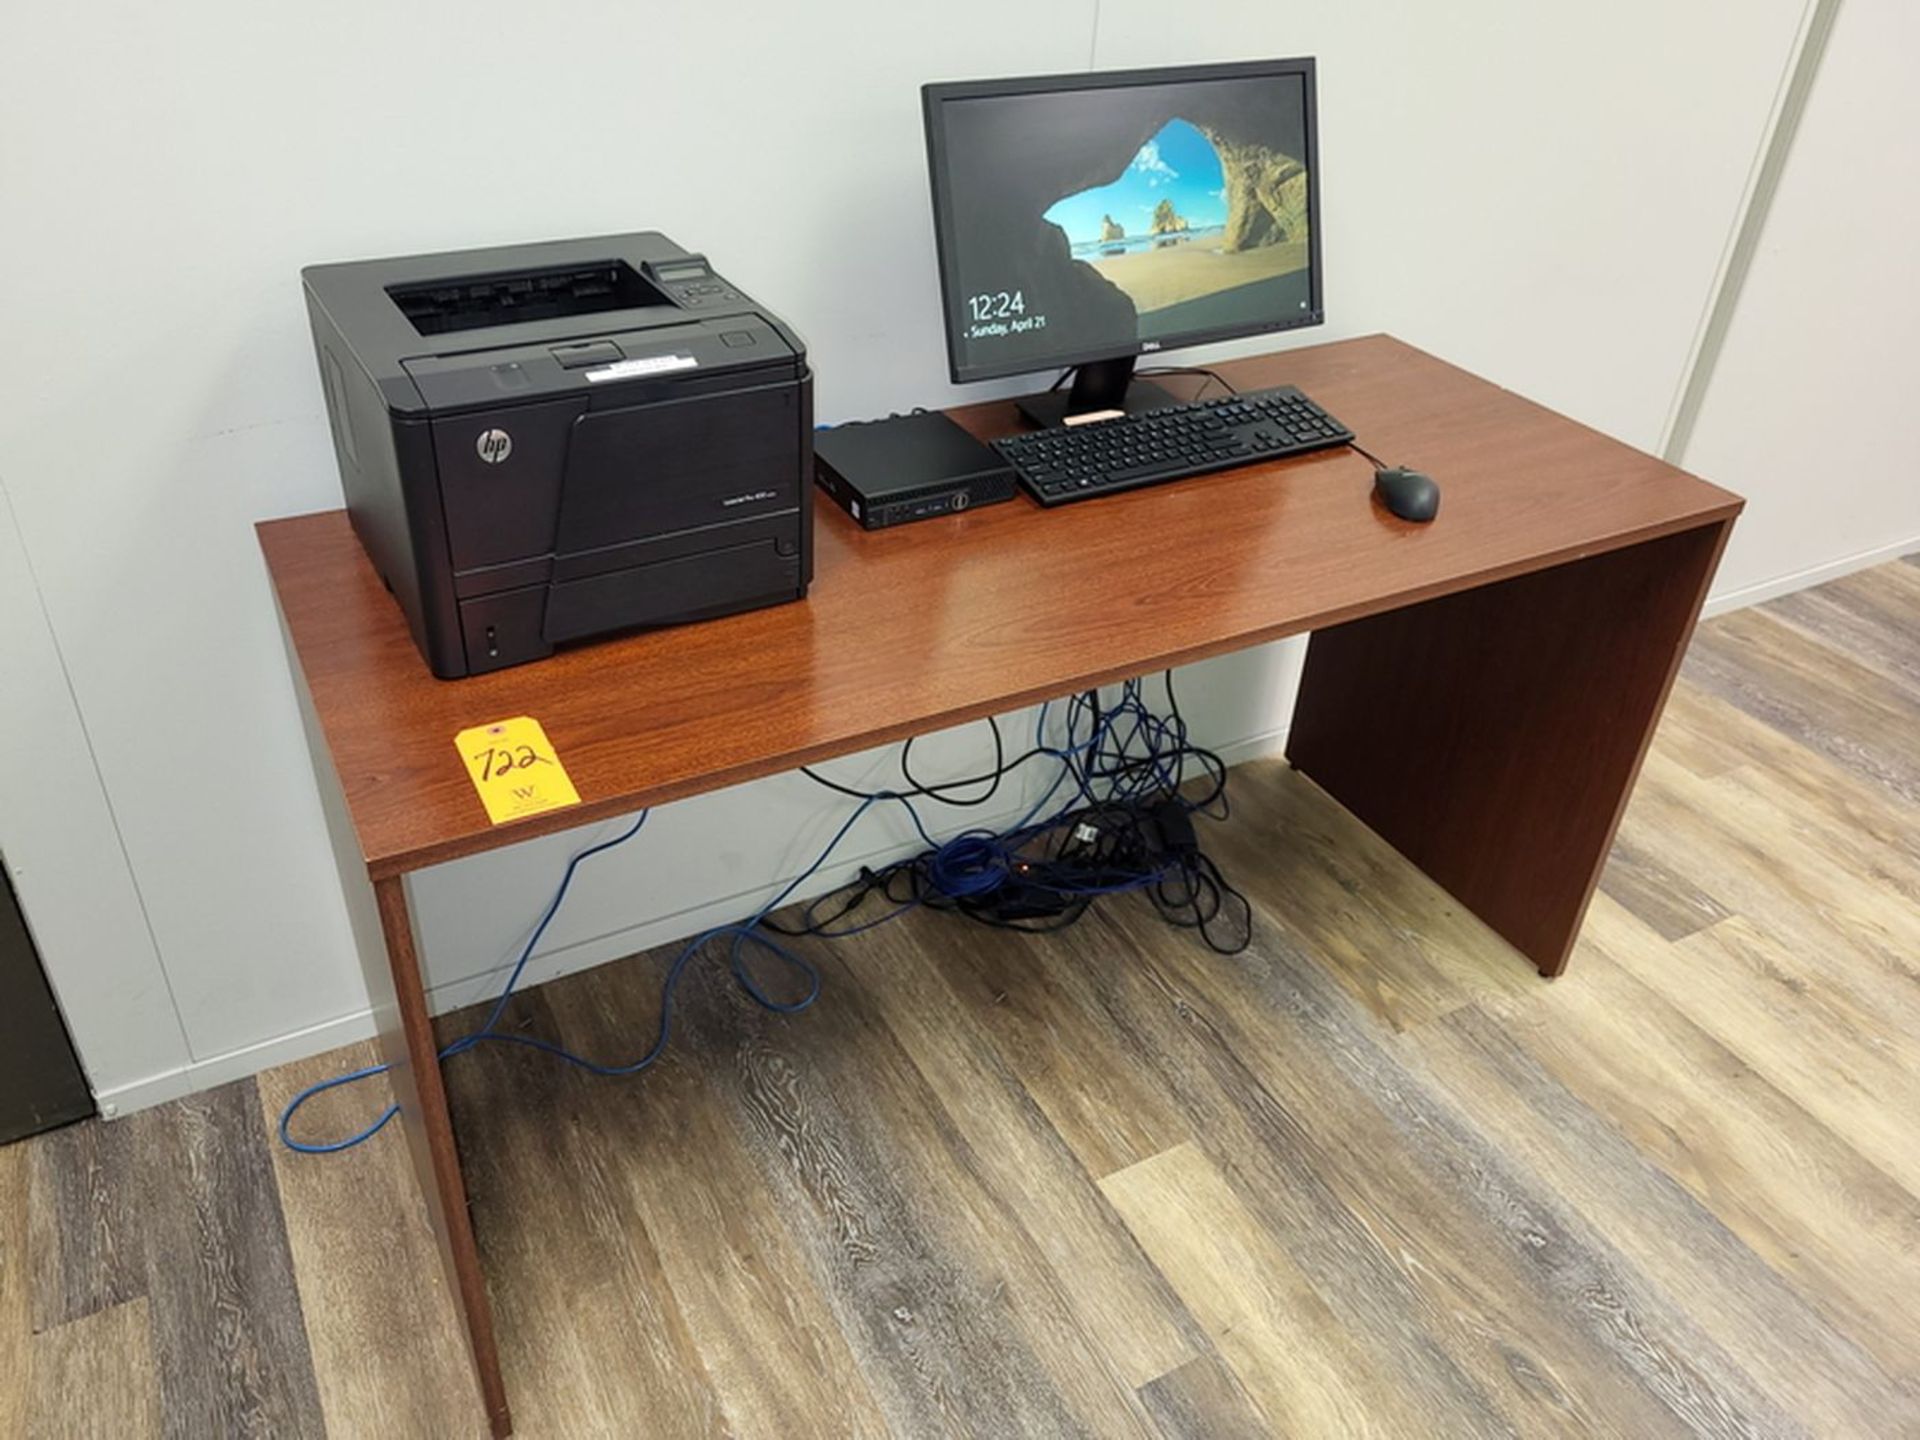 Lot - Wood Computer Desk & Contents; Includes Dell OptiPlex 3050 Micro PC, Monitor, and HP